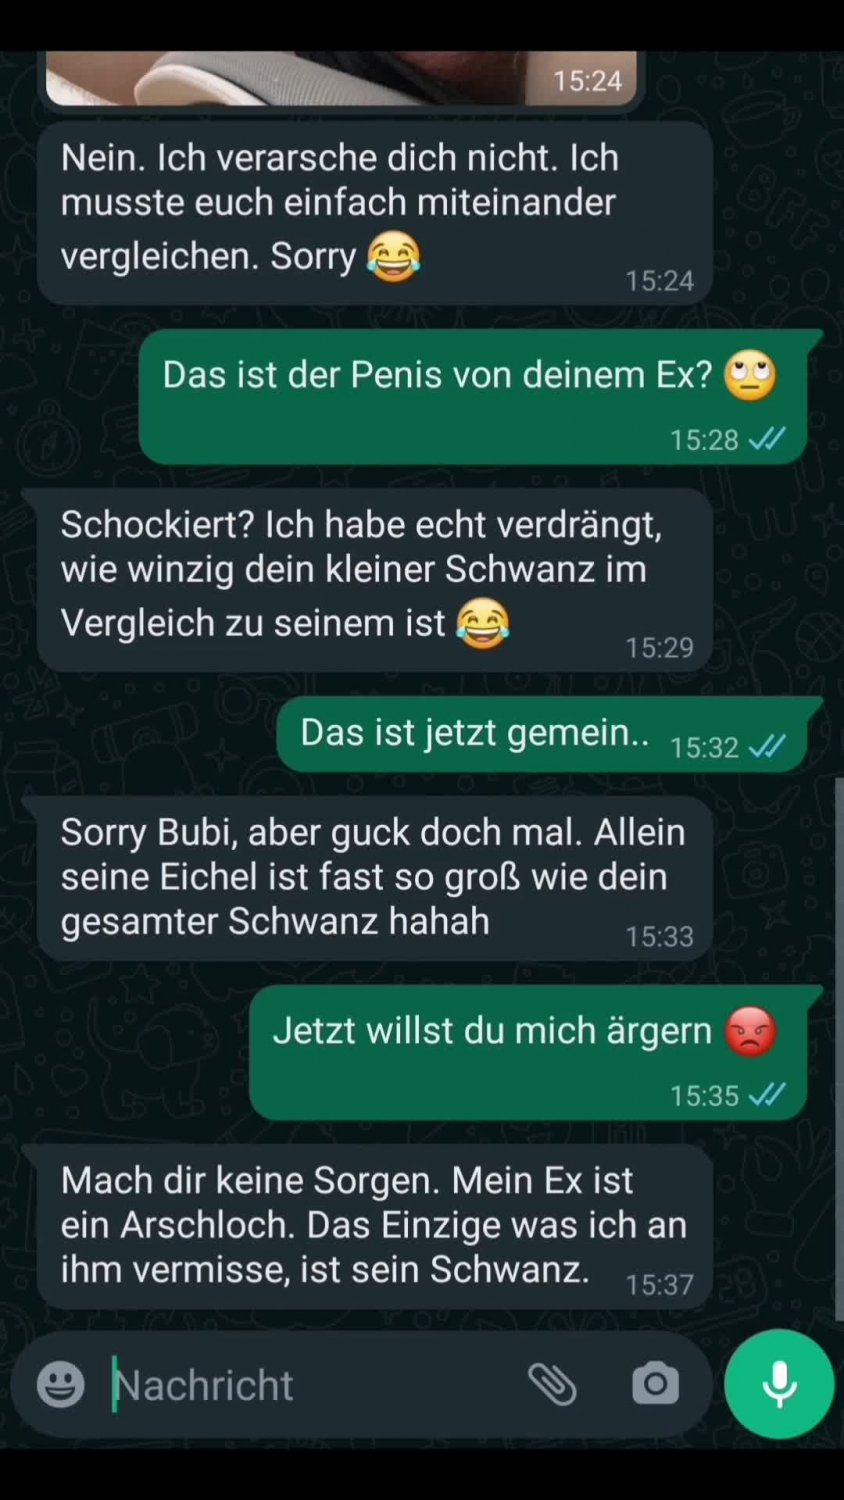 Small penis humiliation WhatsApp Chat (German) photo pic